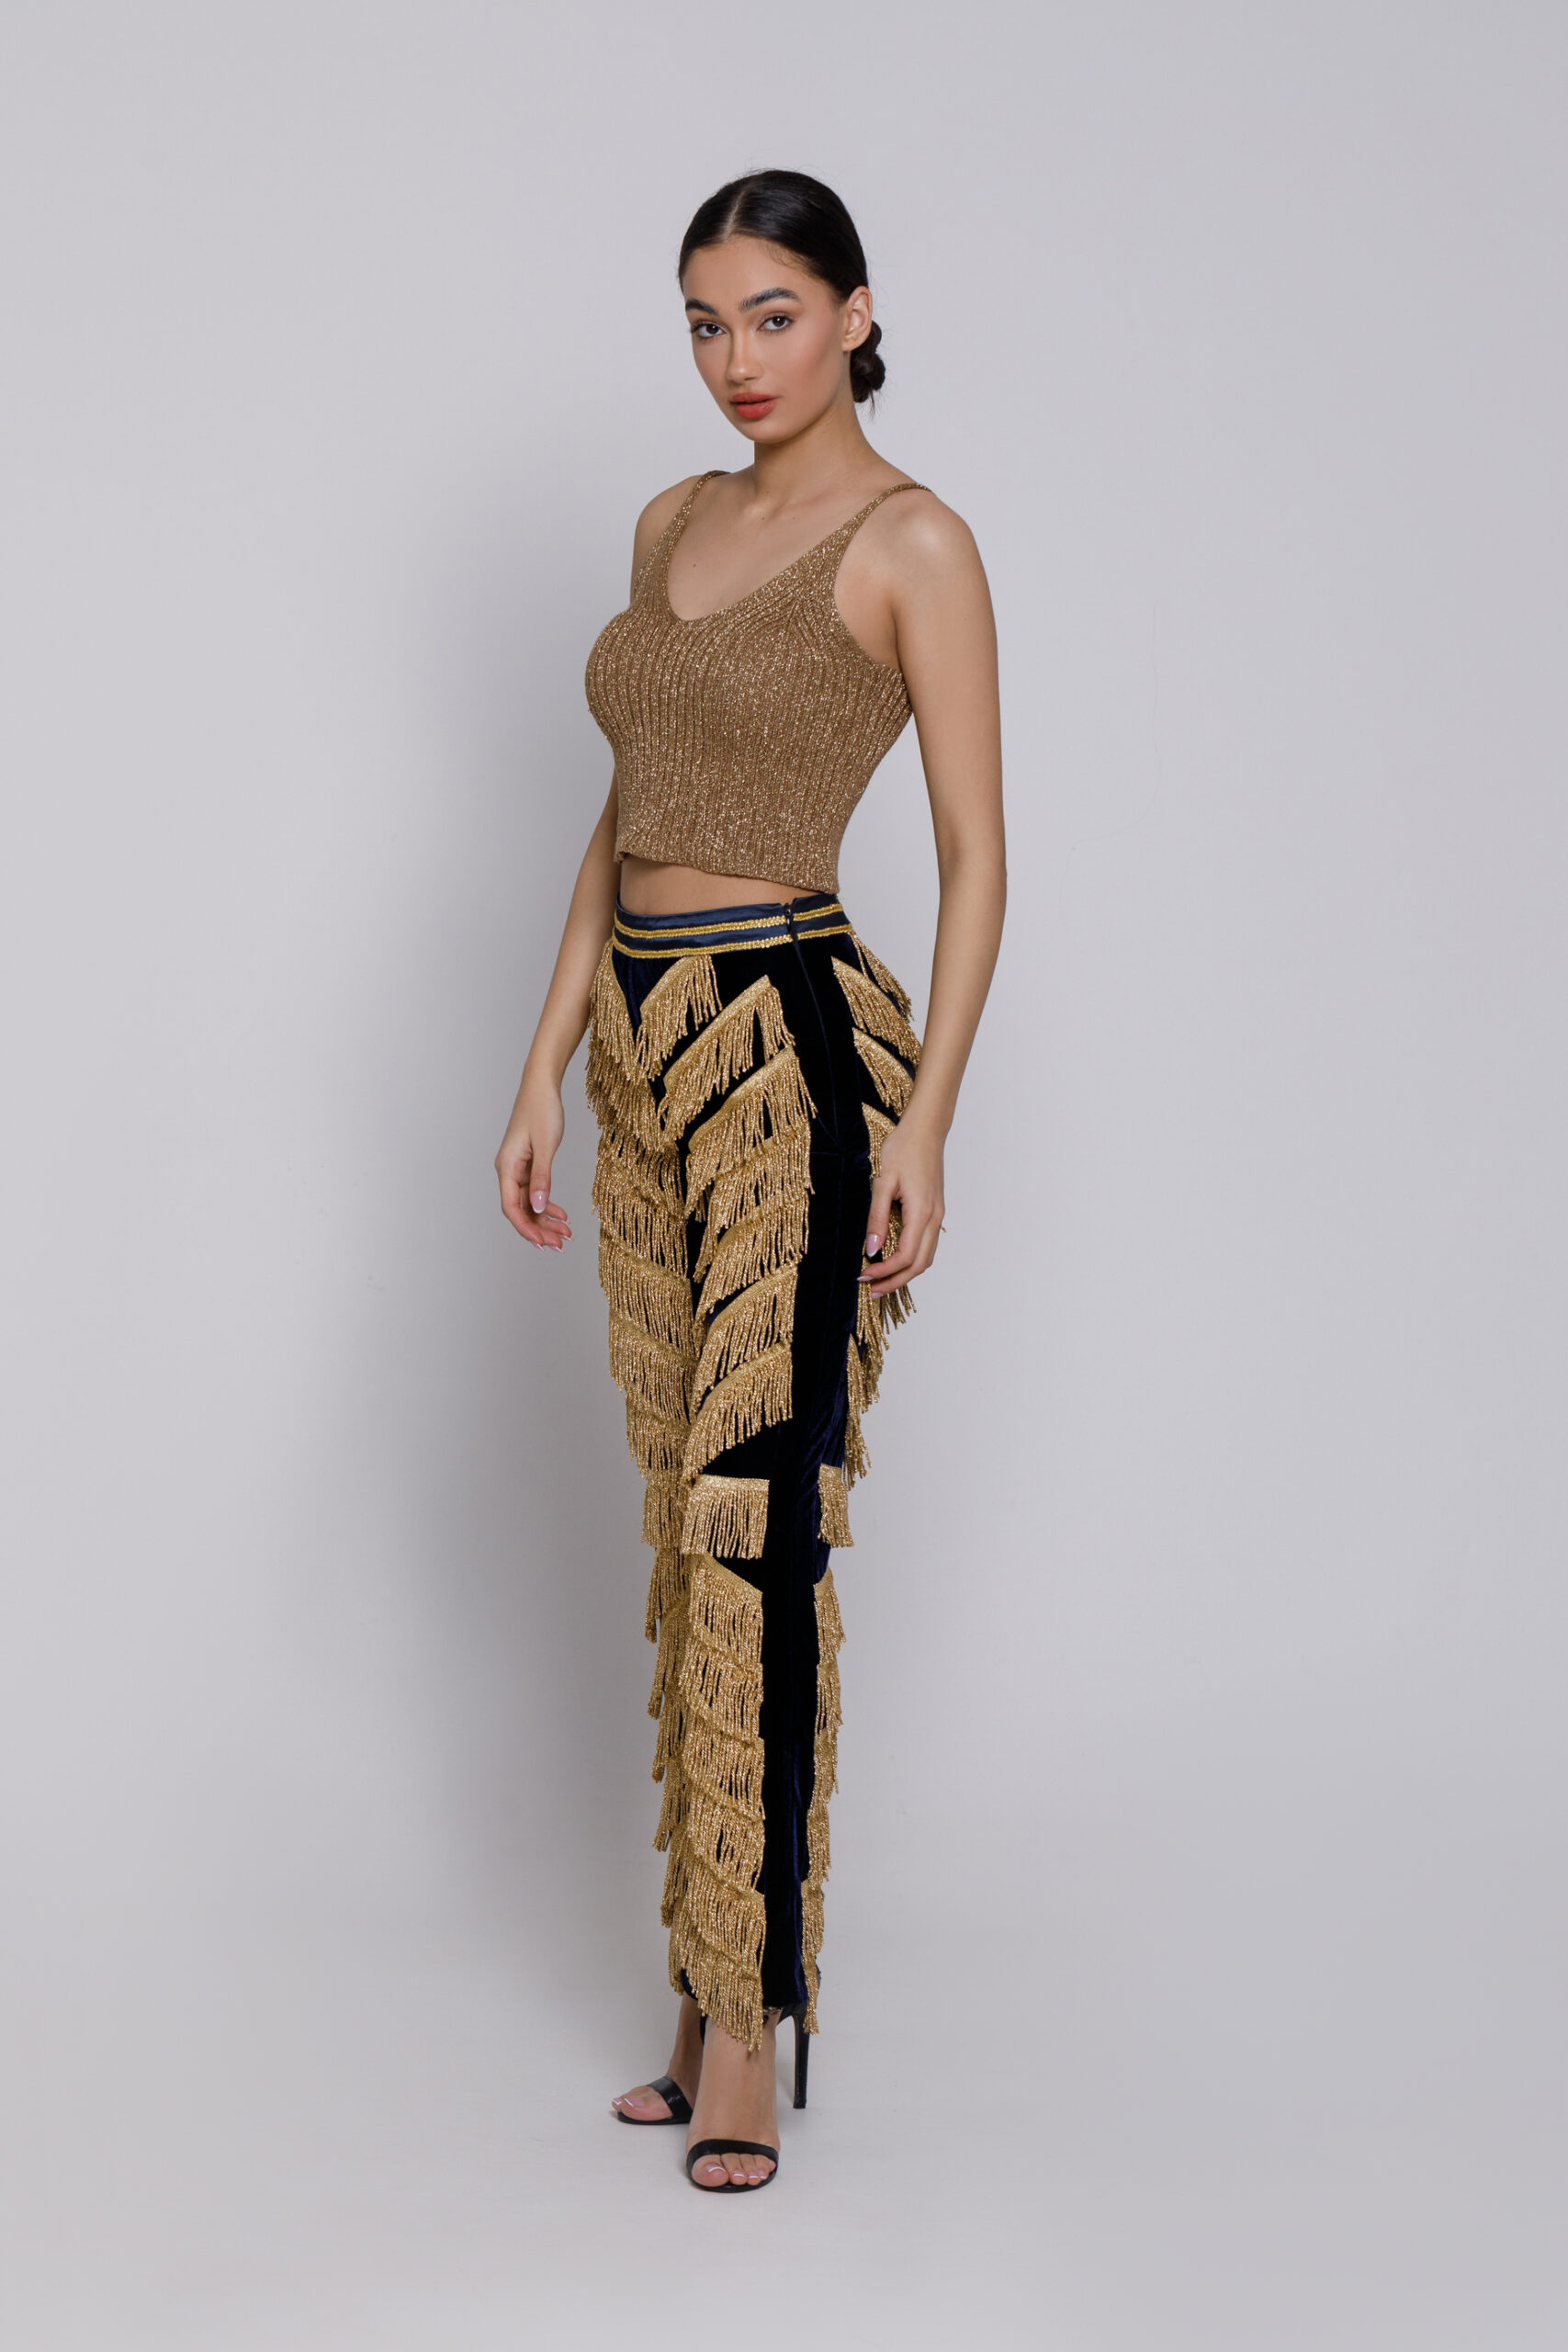 IEZABEL velvet trousers with golden fringes. Natural fabrics, original design, handmade embroidery